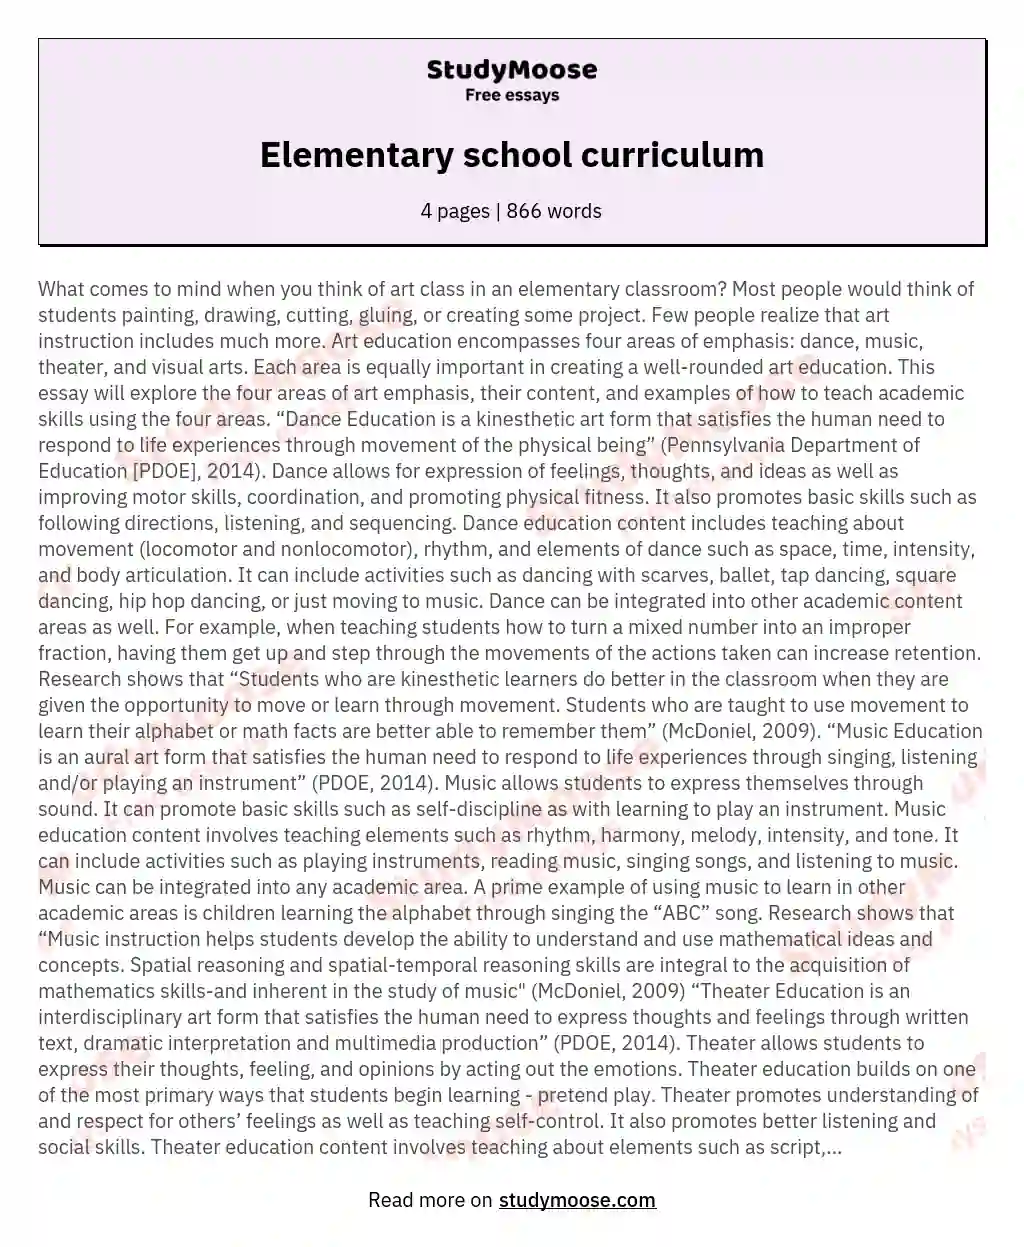 Elementary school curriculum essay